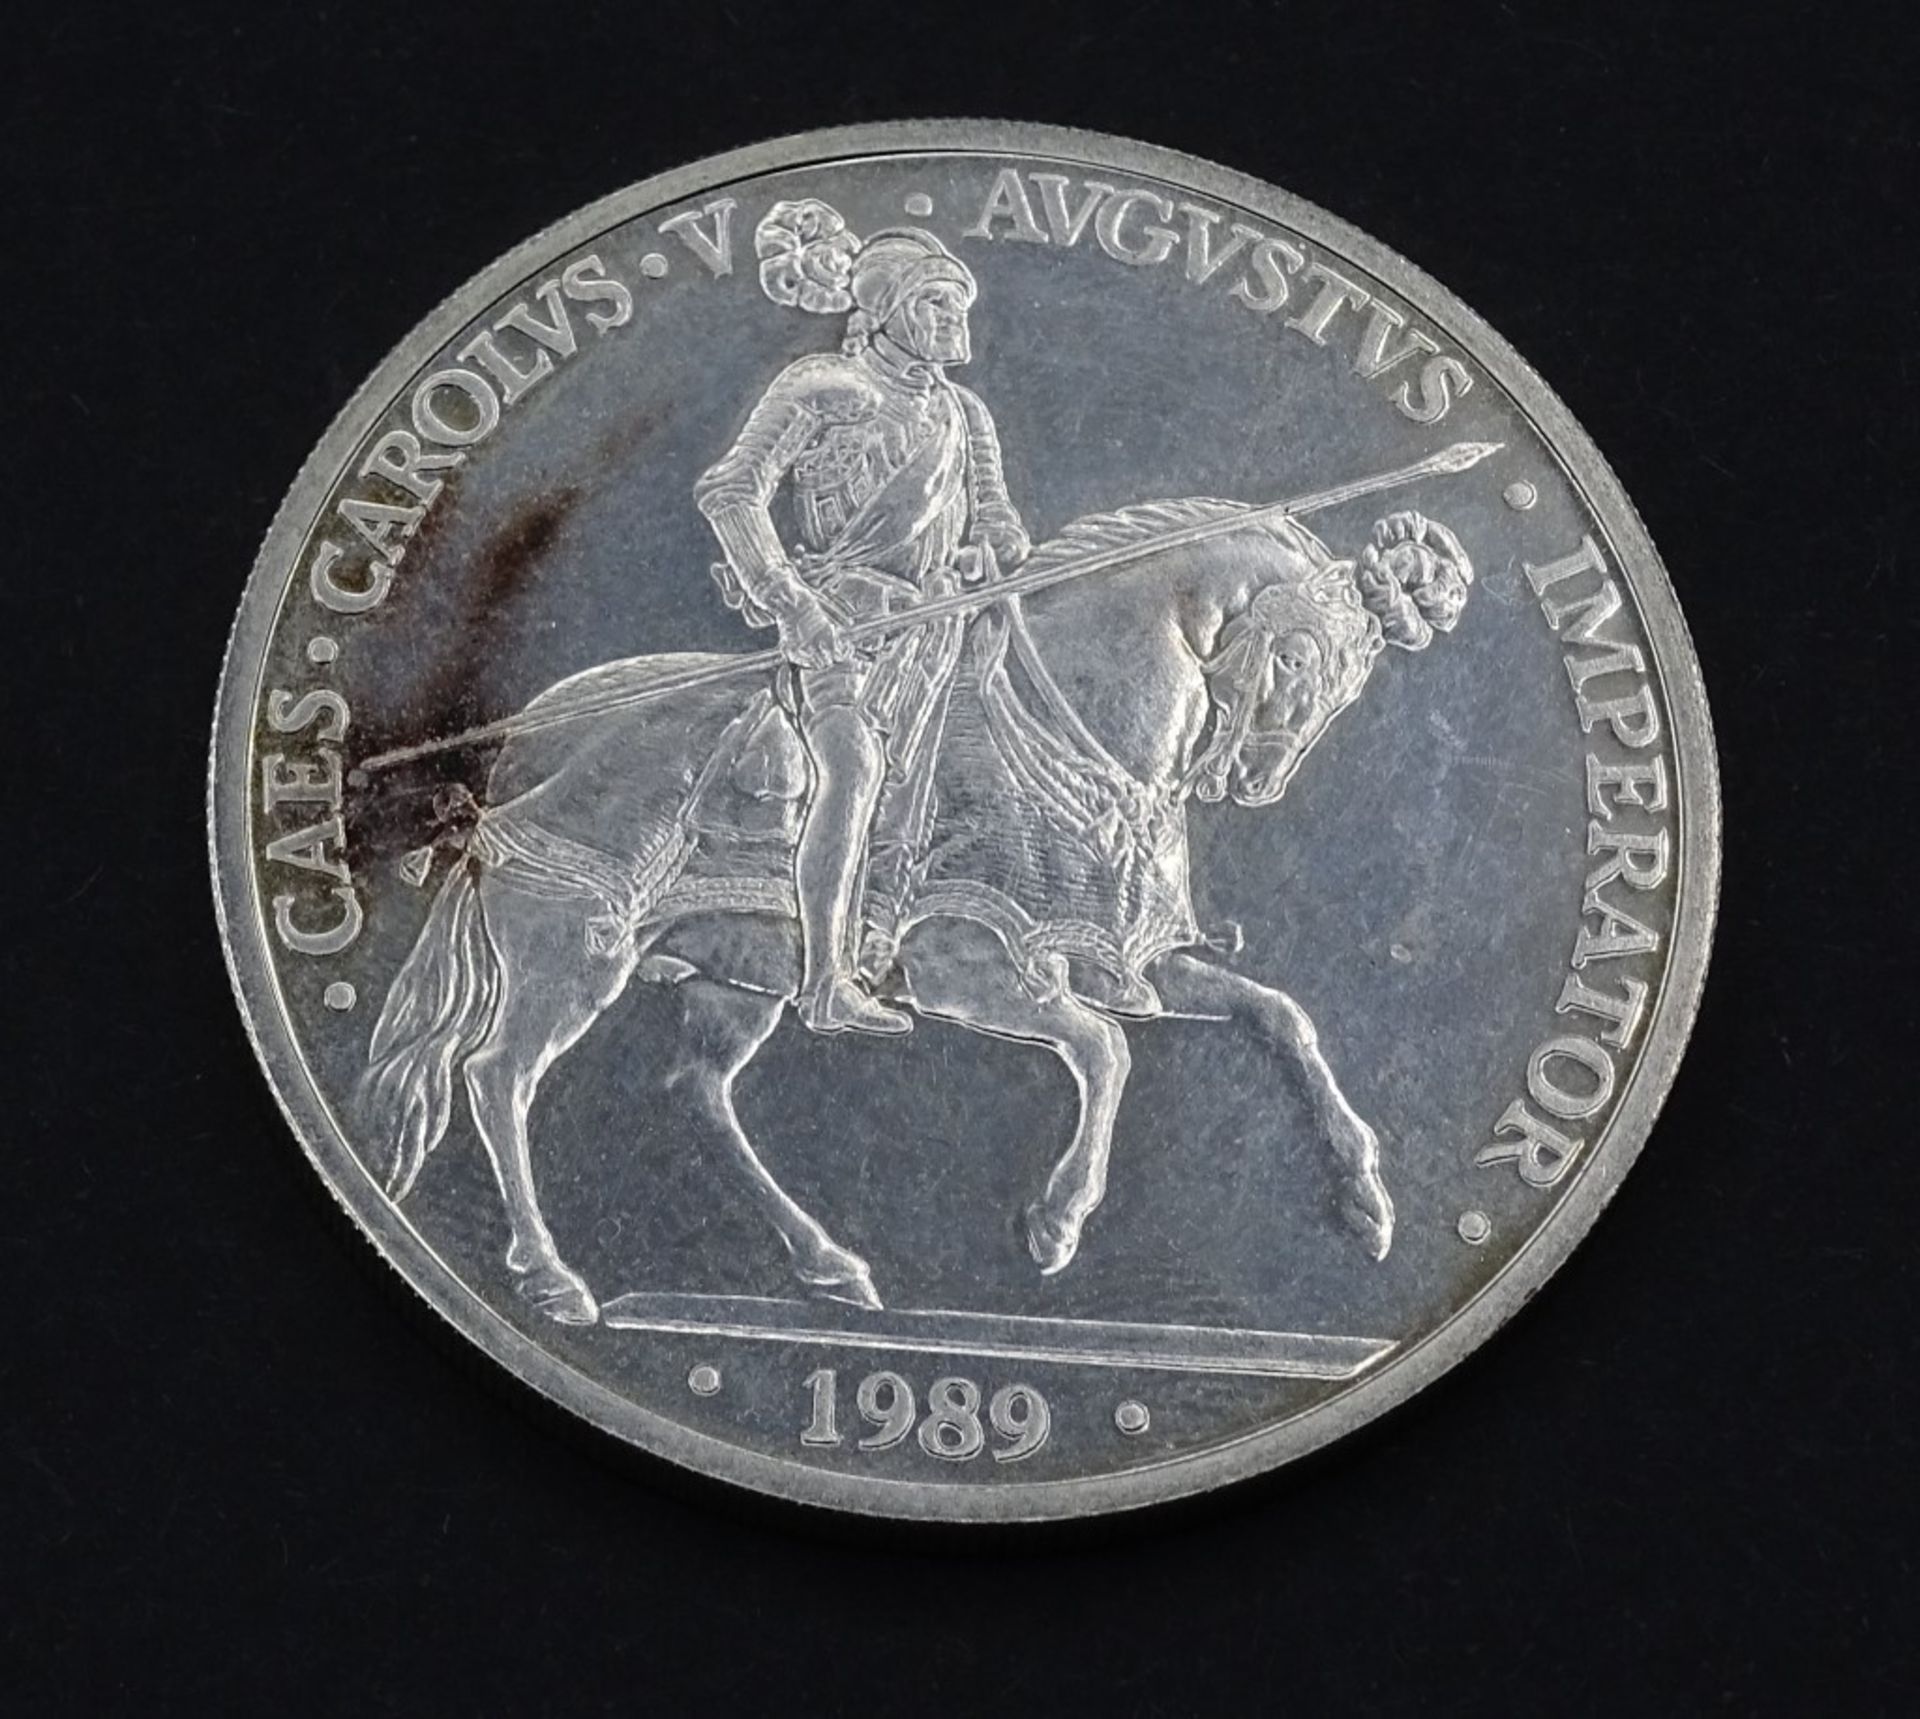 5 Ecu Spanien, 1989 Silber Medaille, 33,5gr.,d- 42mm- - -22.61 % buyer's premium on the hammer